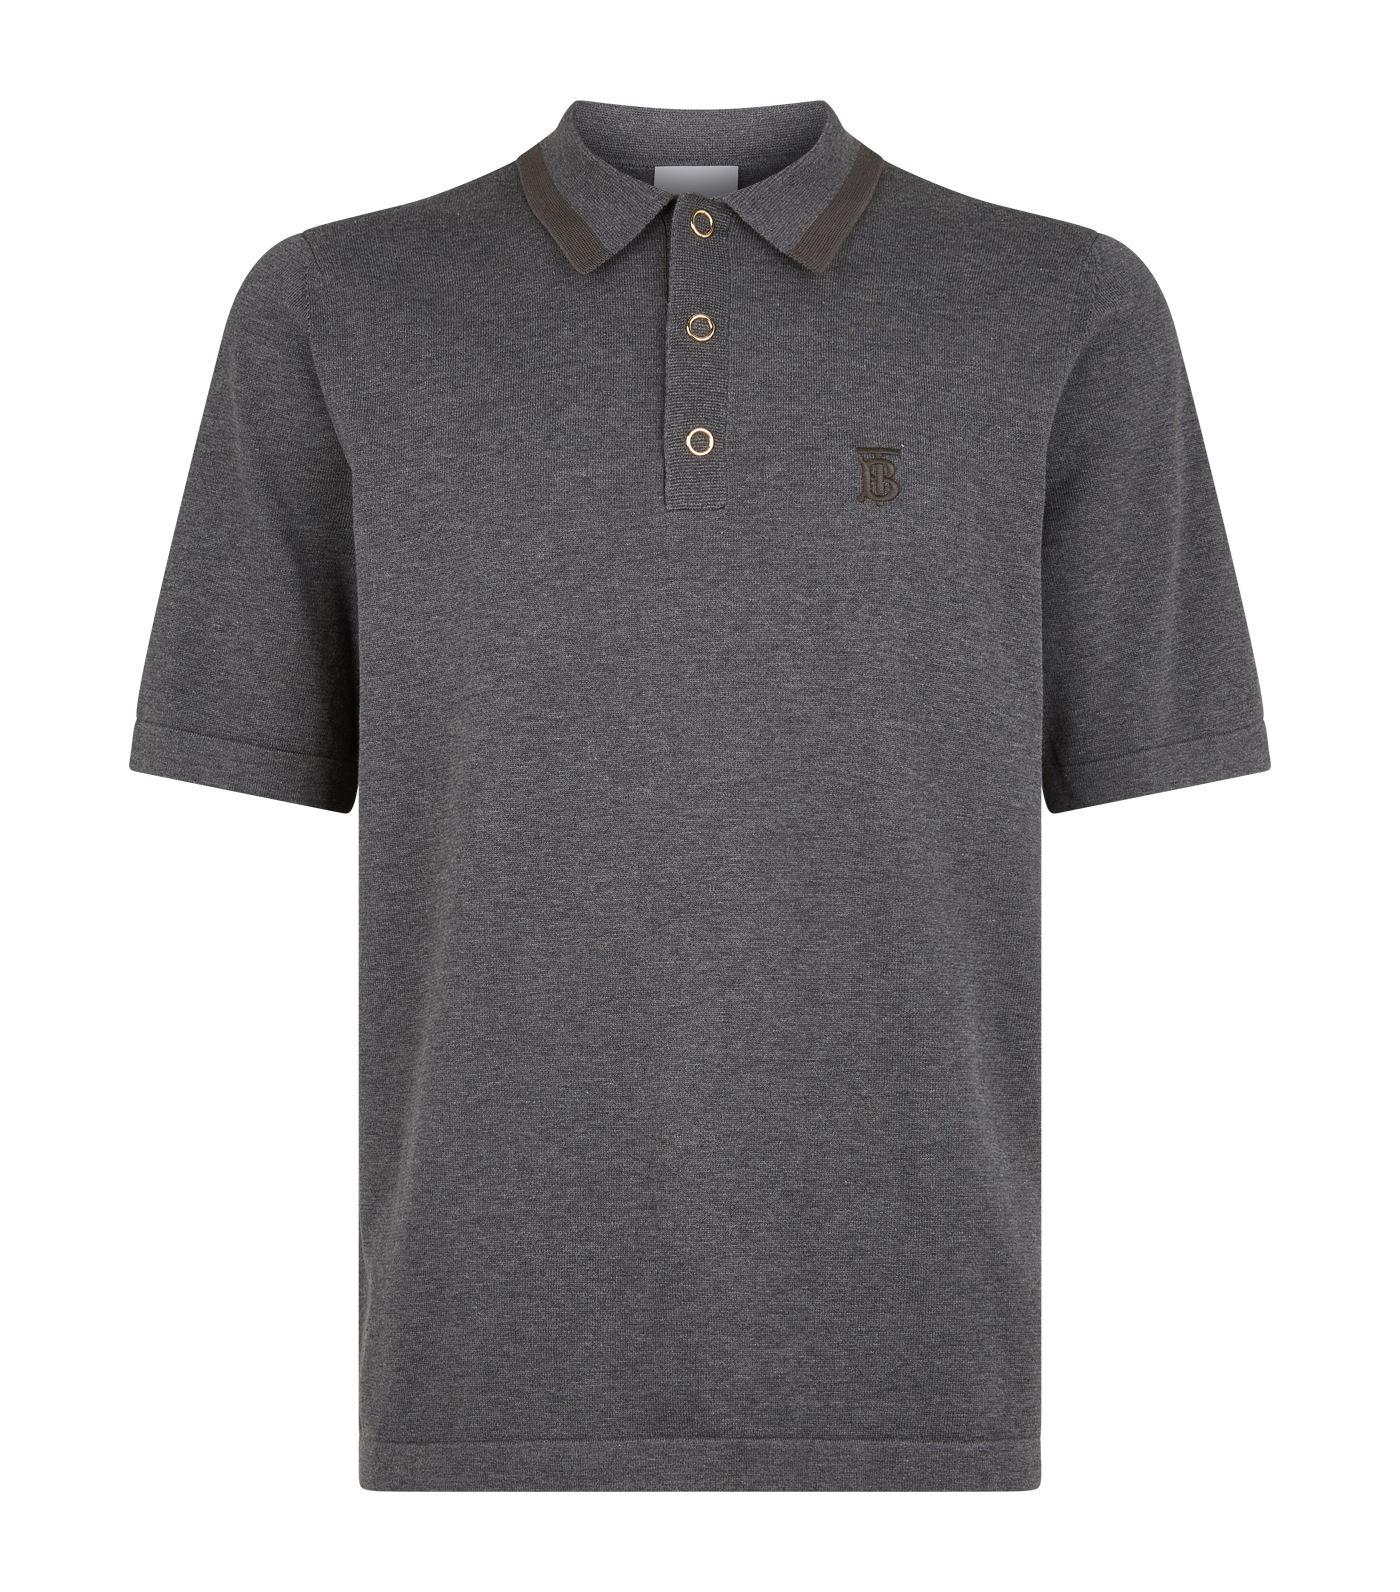 Burberry Monogram Motif Polo Shirt in Gray for Men - Lyst